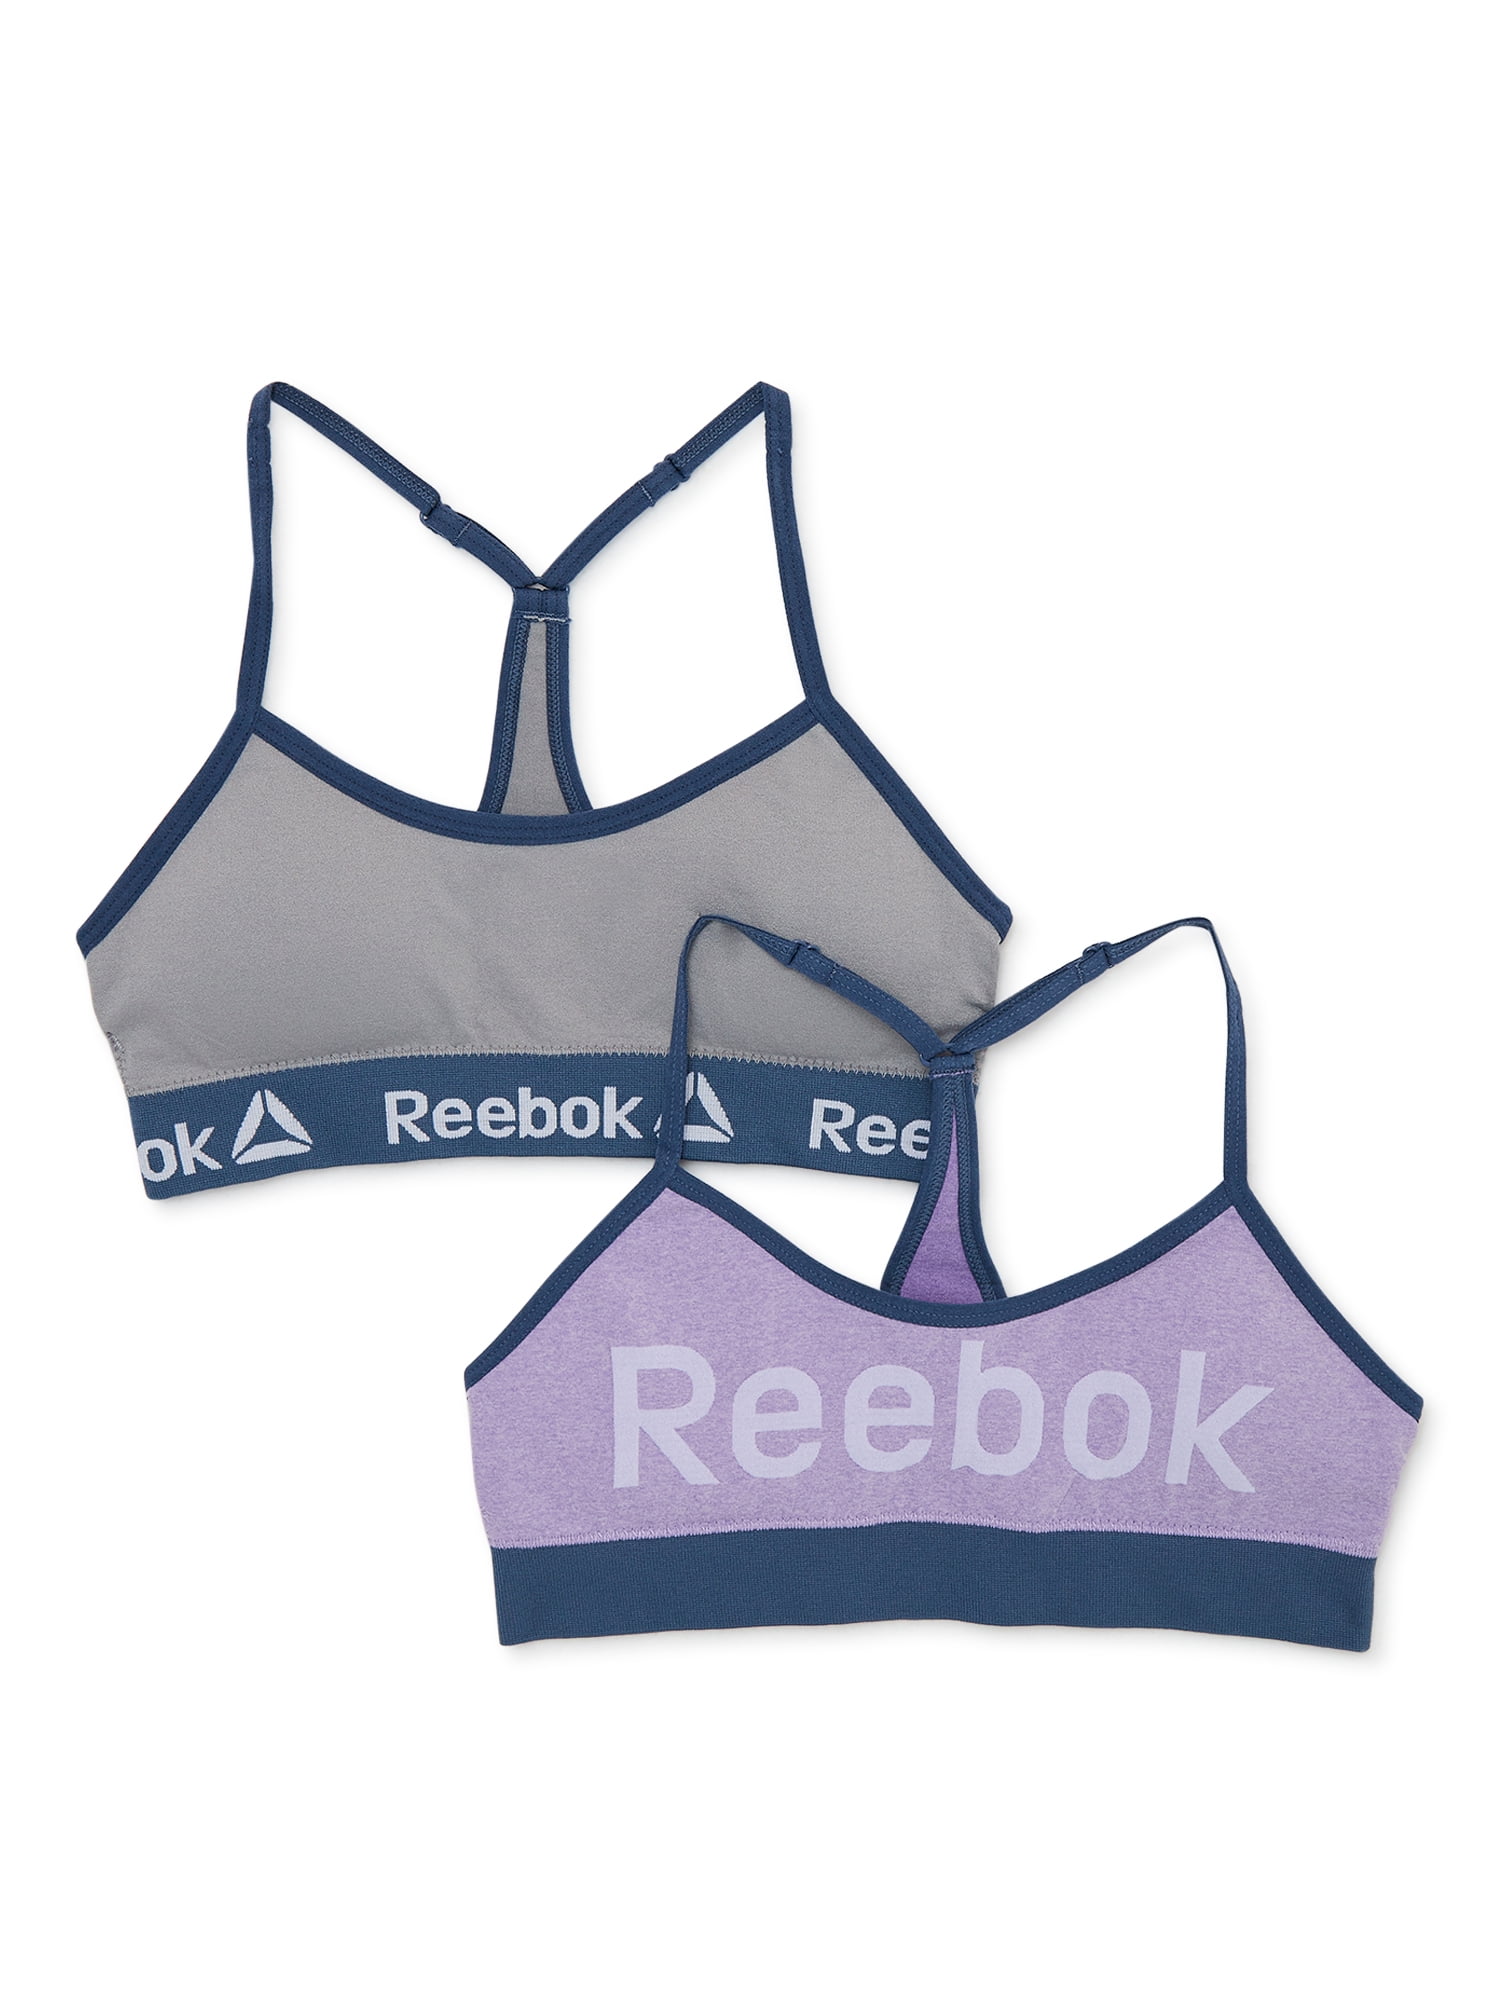 Reebok Girls Seamless Strappy Bralettes, 2-Pack